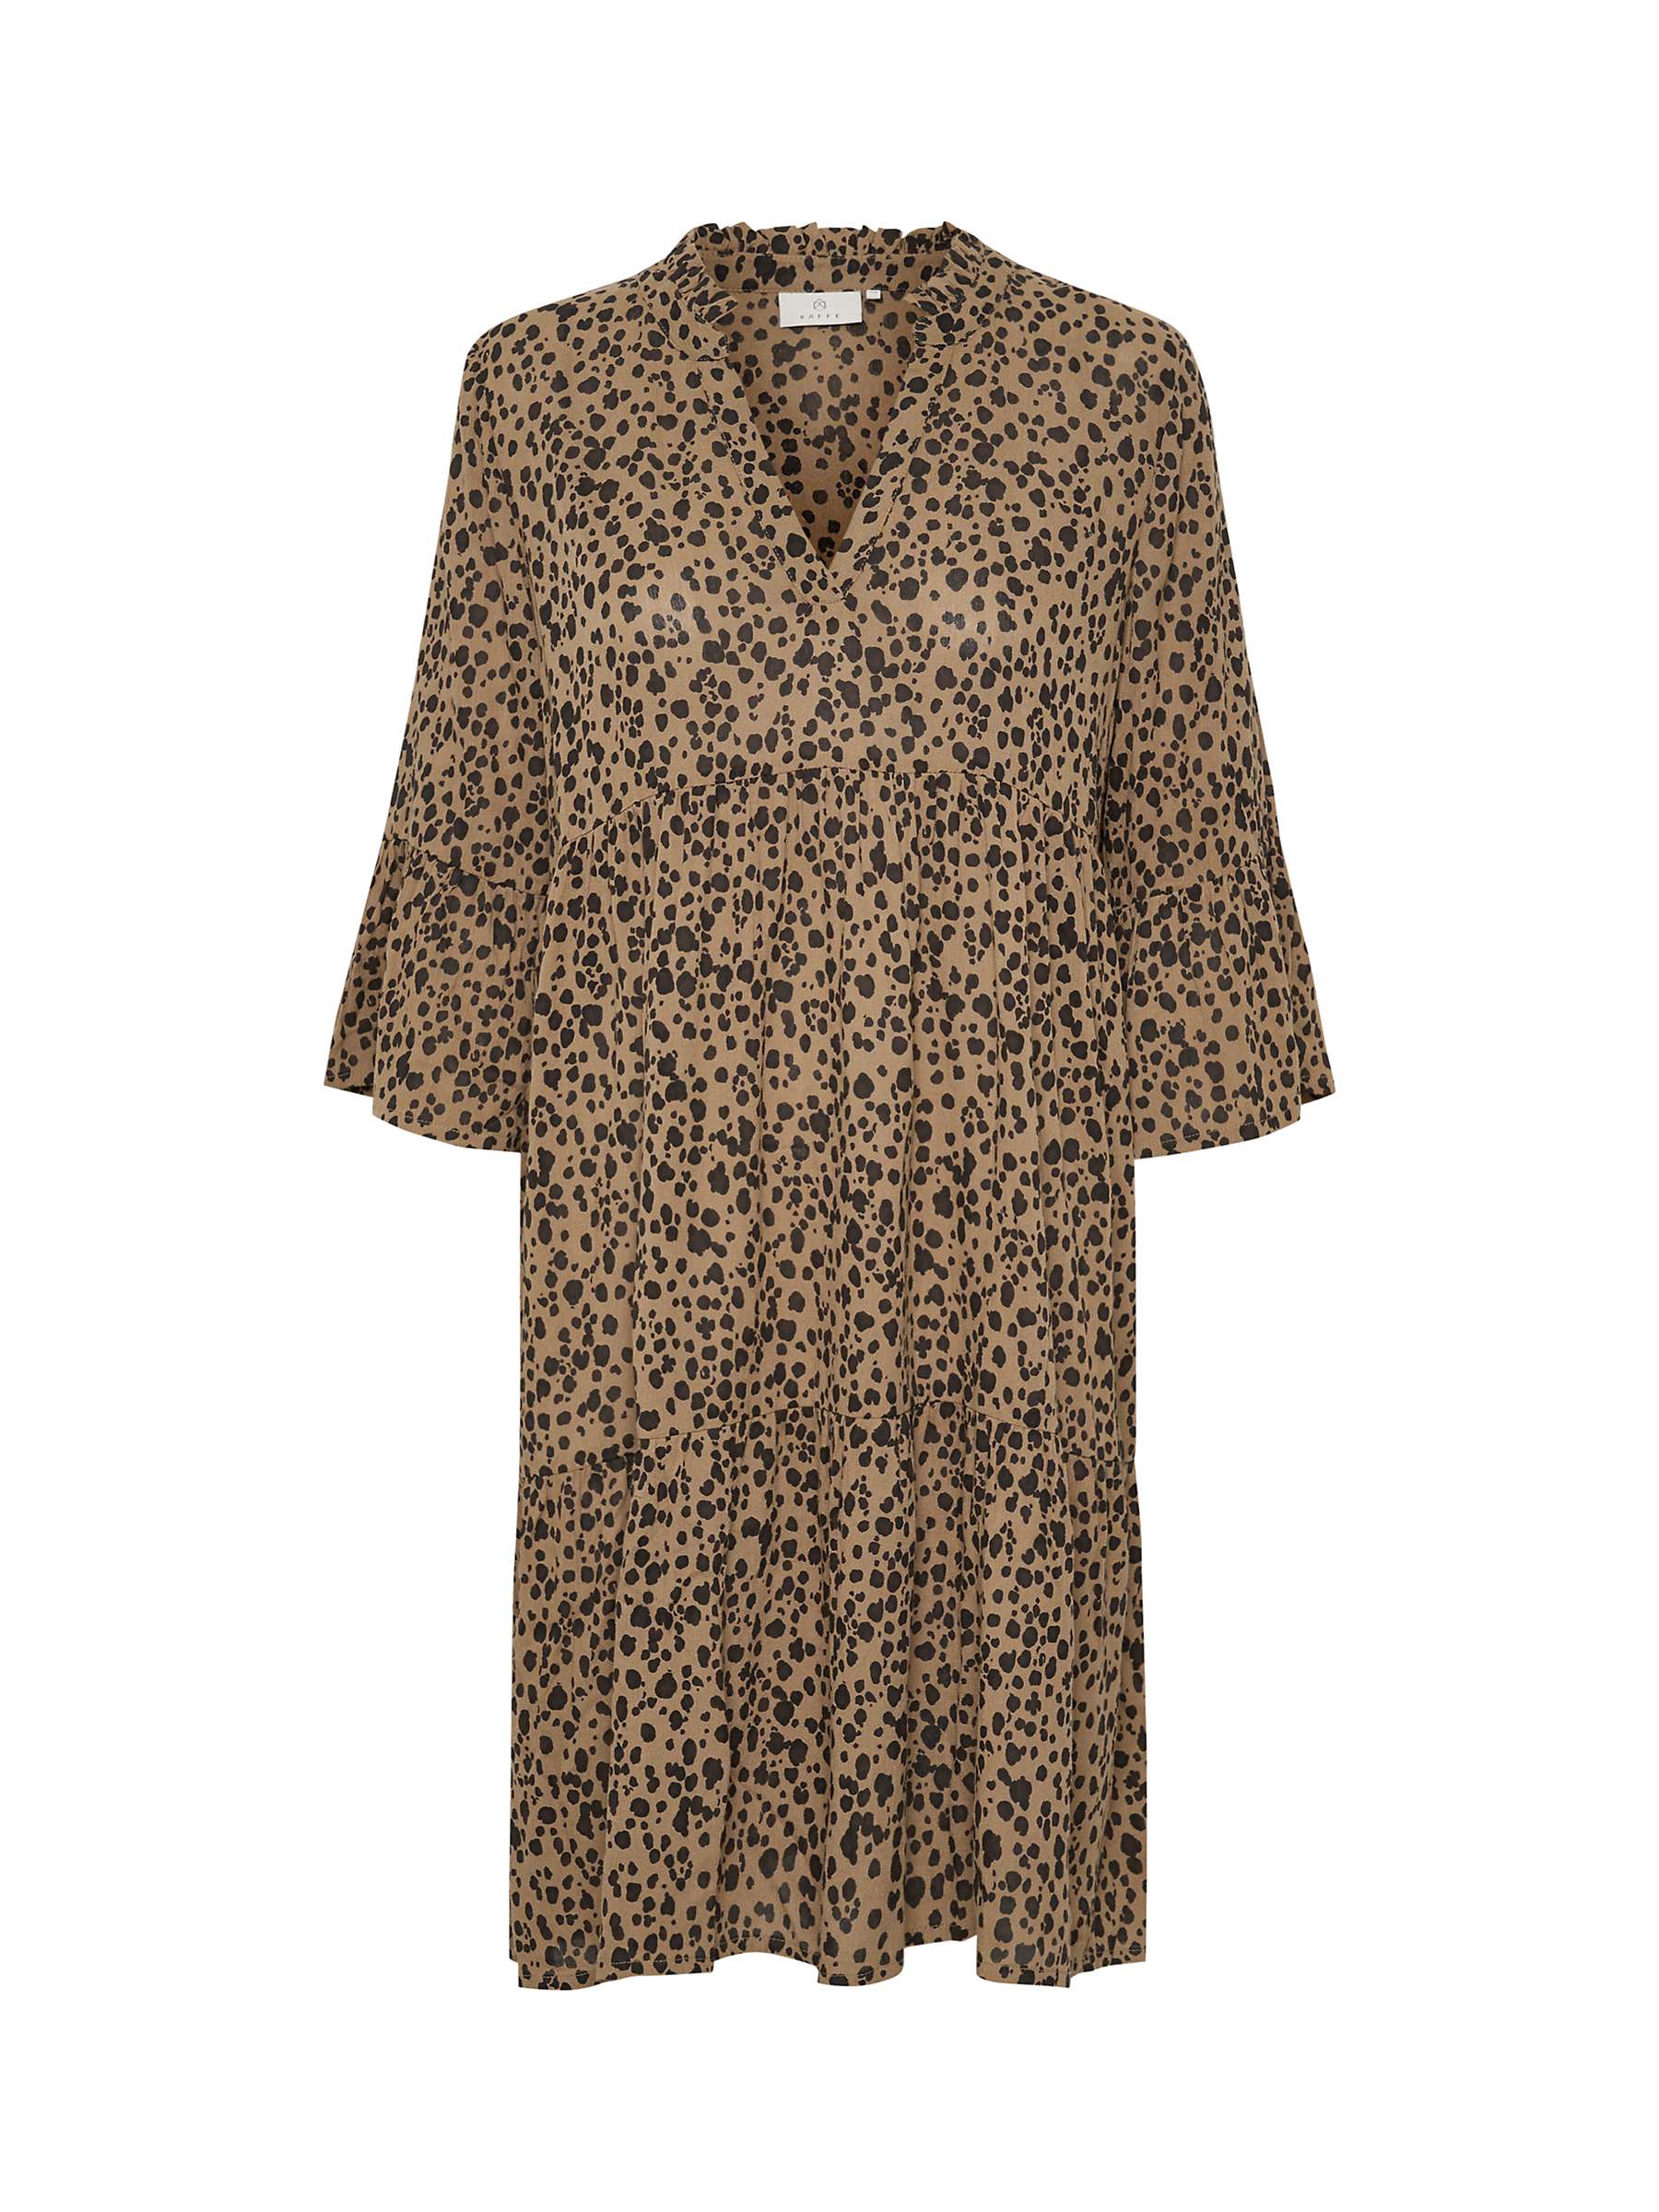 Buy KAFFE Jean Animal Print Tunic Dress, Cocoa Crème/Java Online at johnlewis.com